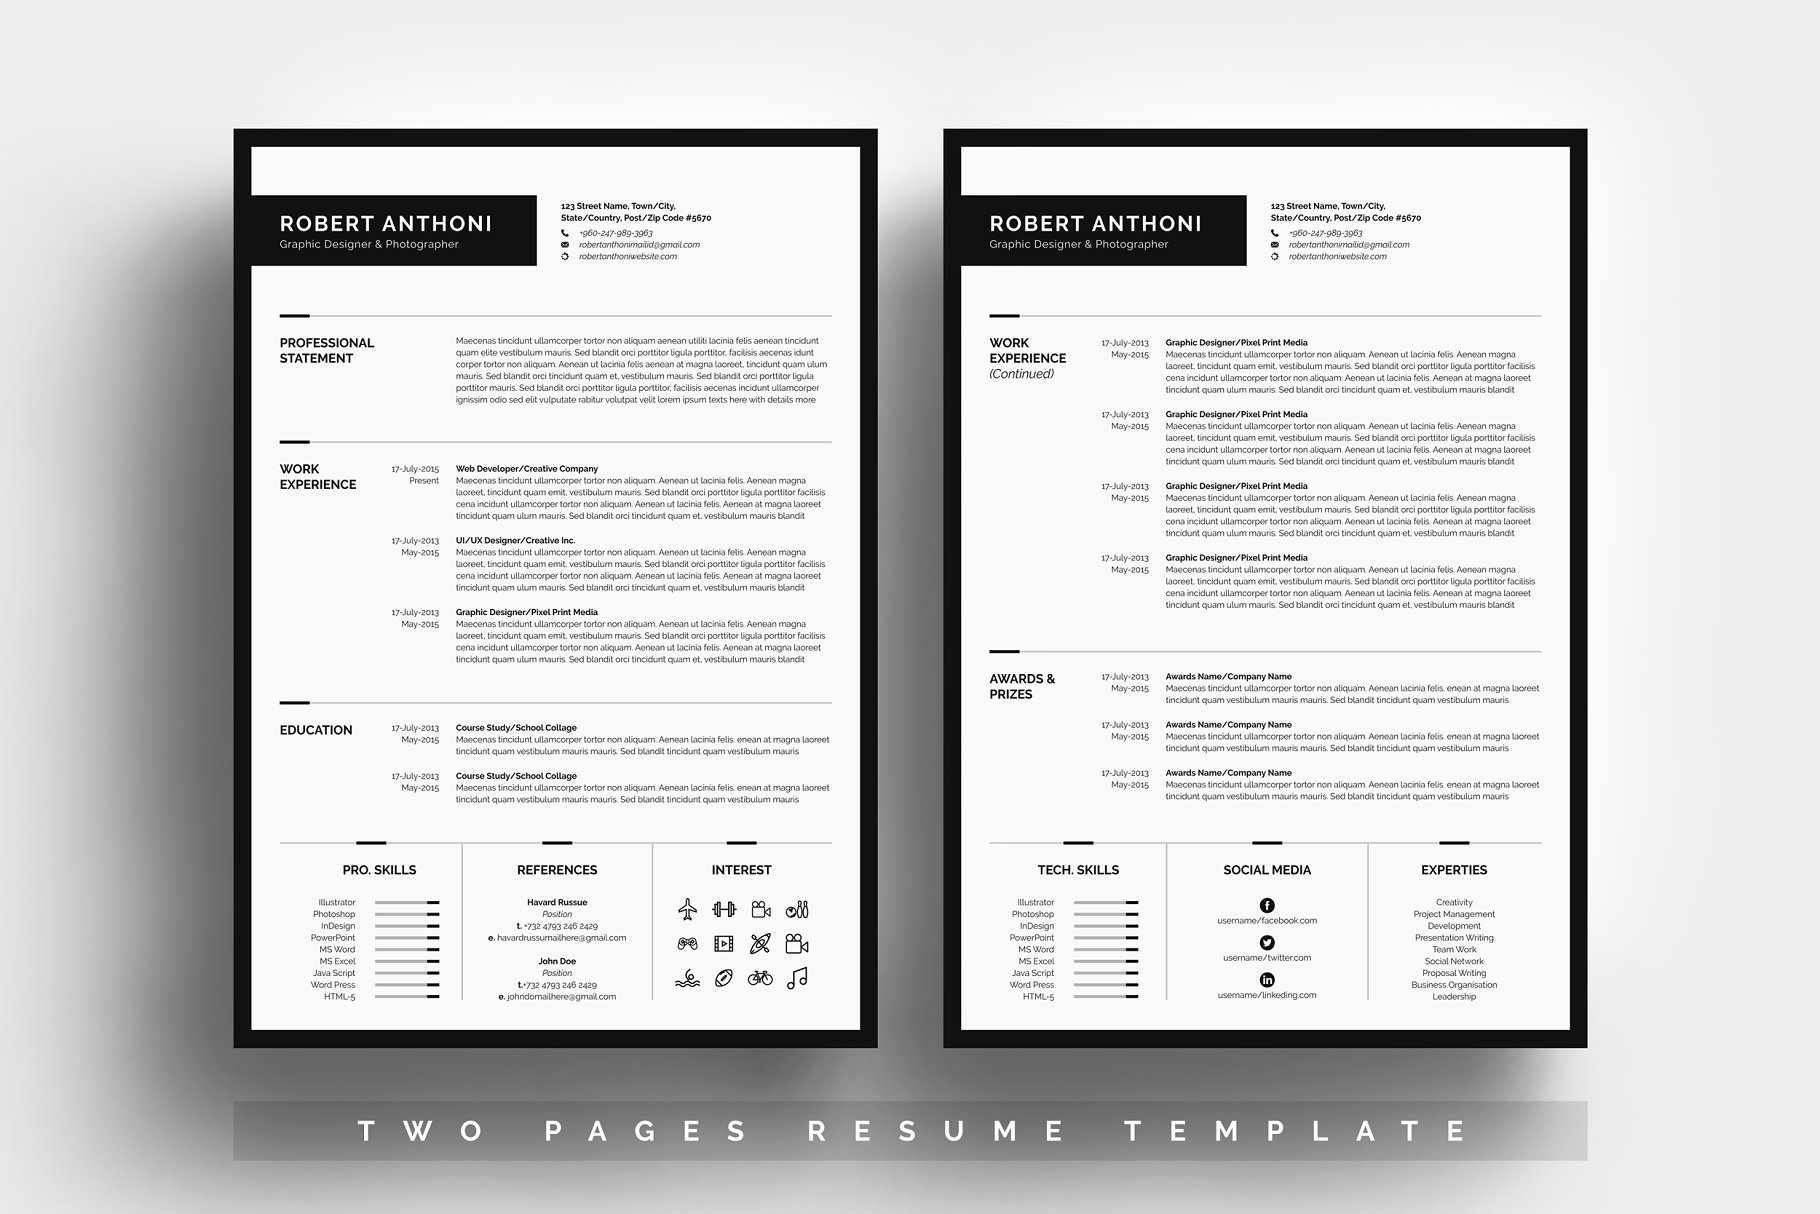 简约风格电子简历模板[4页] Clean Resume Template 4 Pages插图1